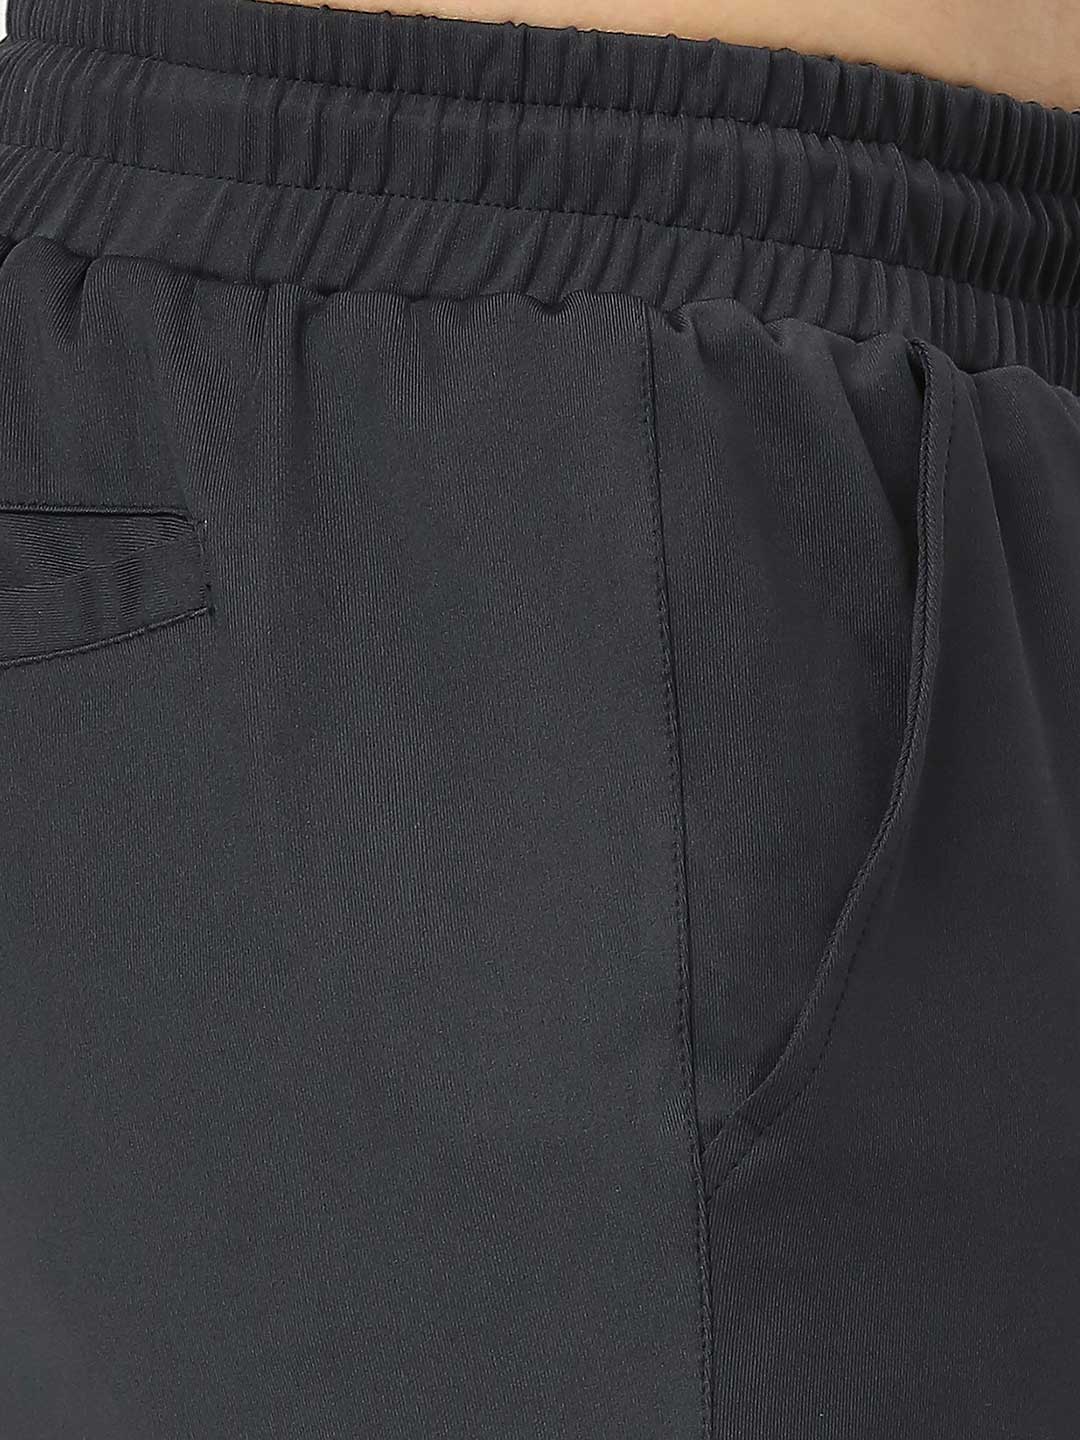 Men's Sports Trackpants - Charcoal Grey